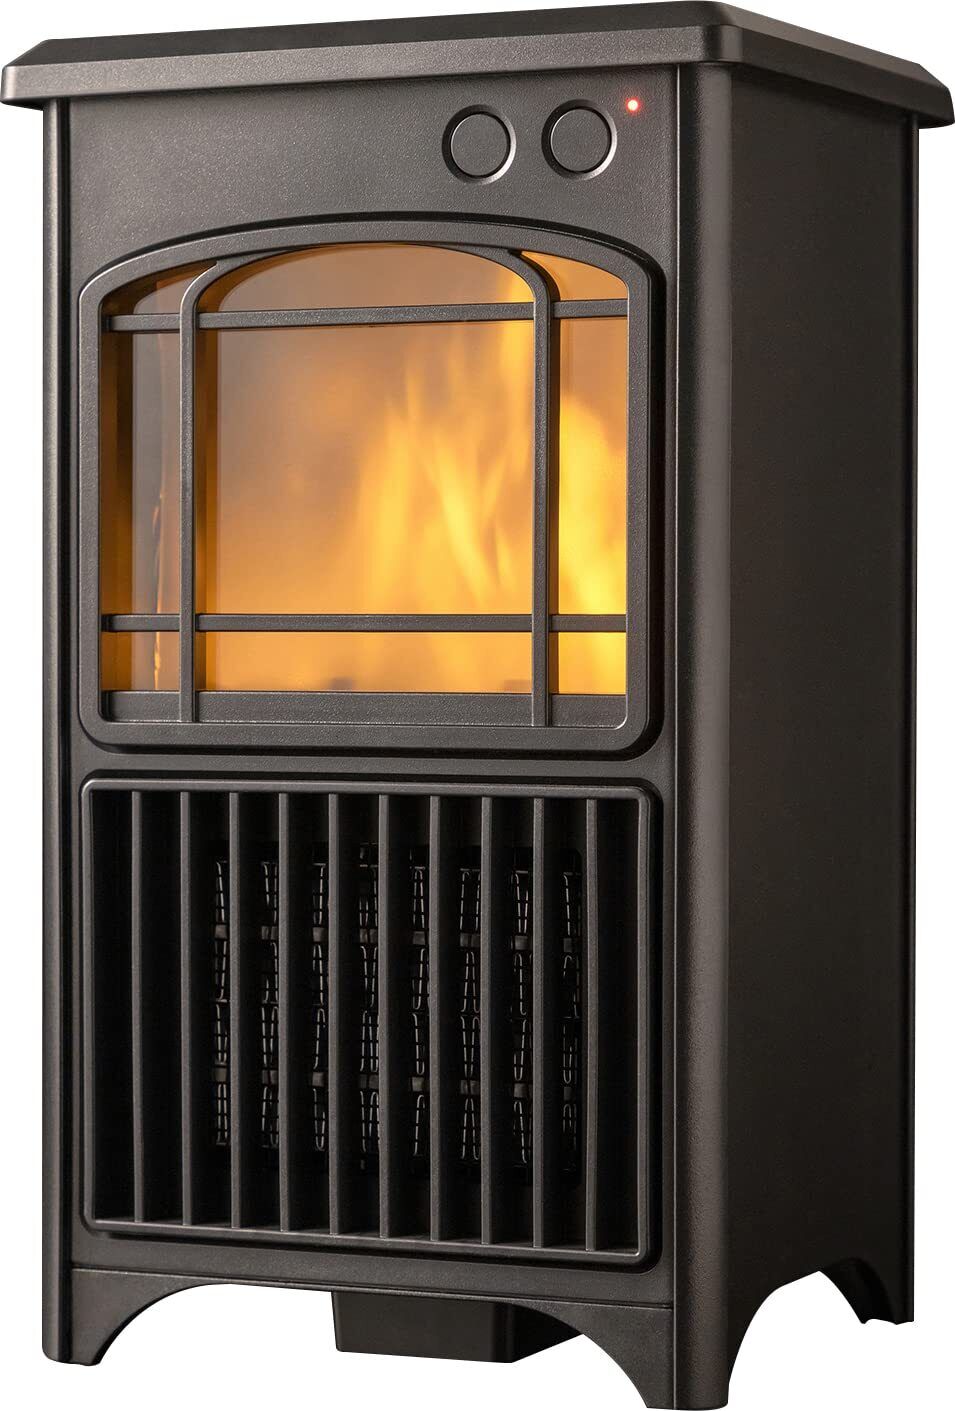 Topland Ceramic Heater Fireplace Illumination SC-DCH300BK black